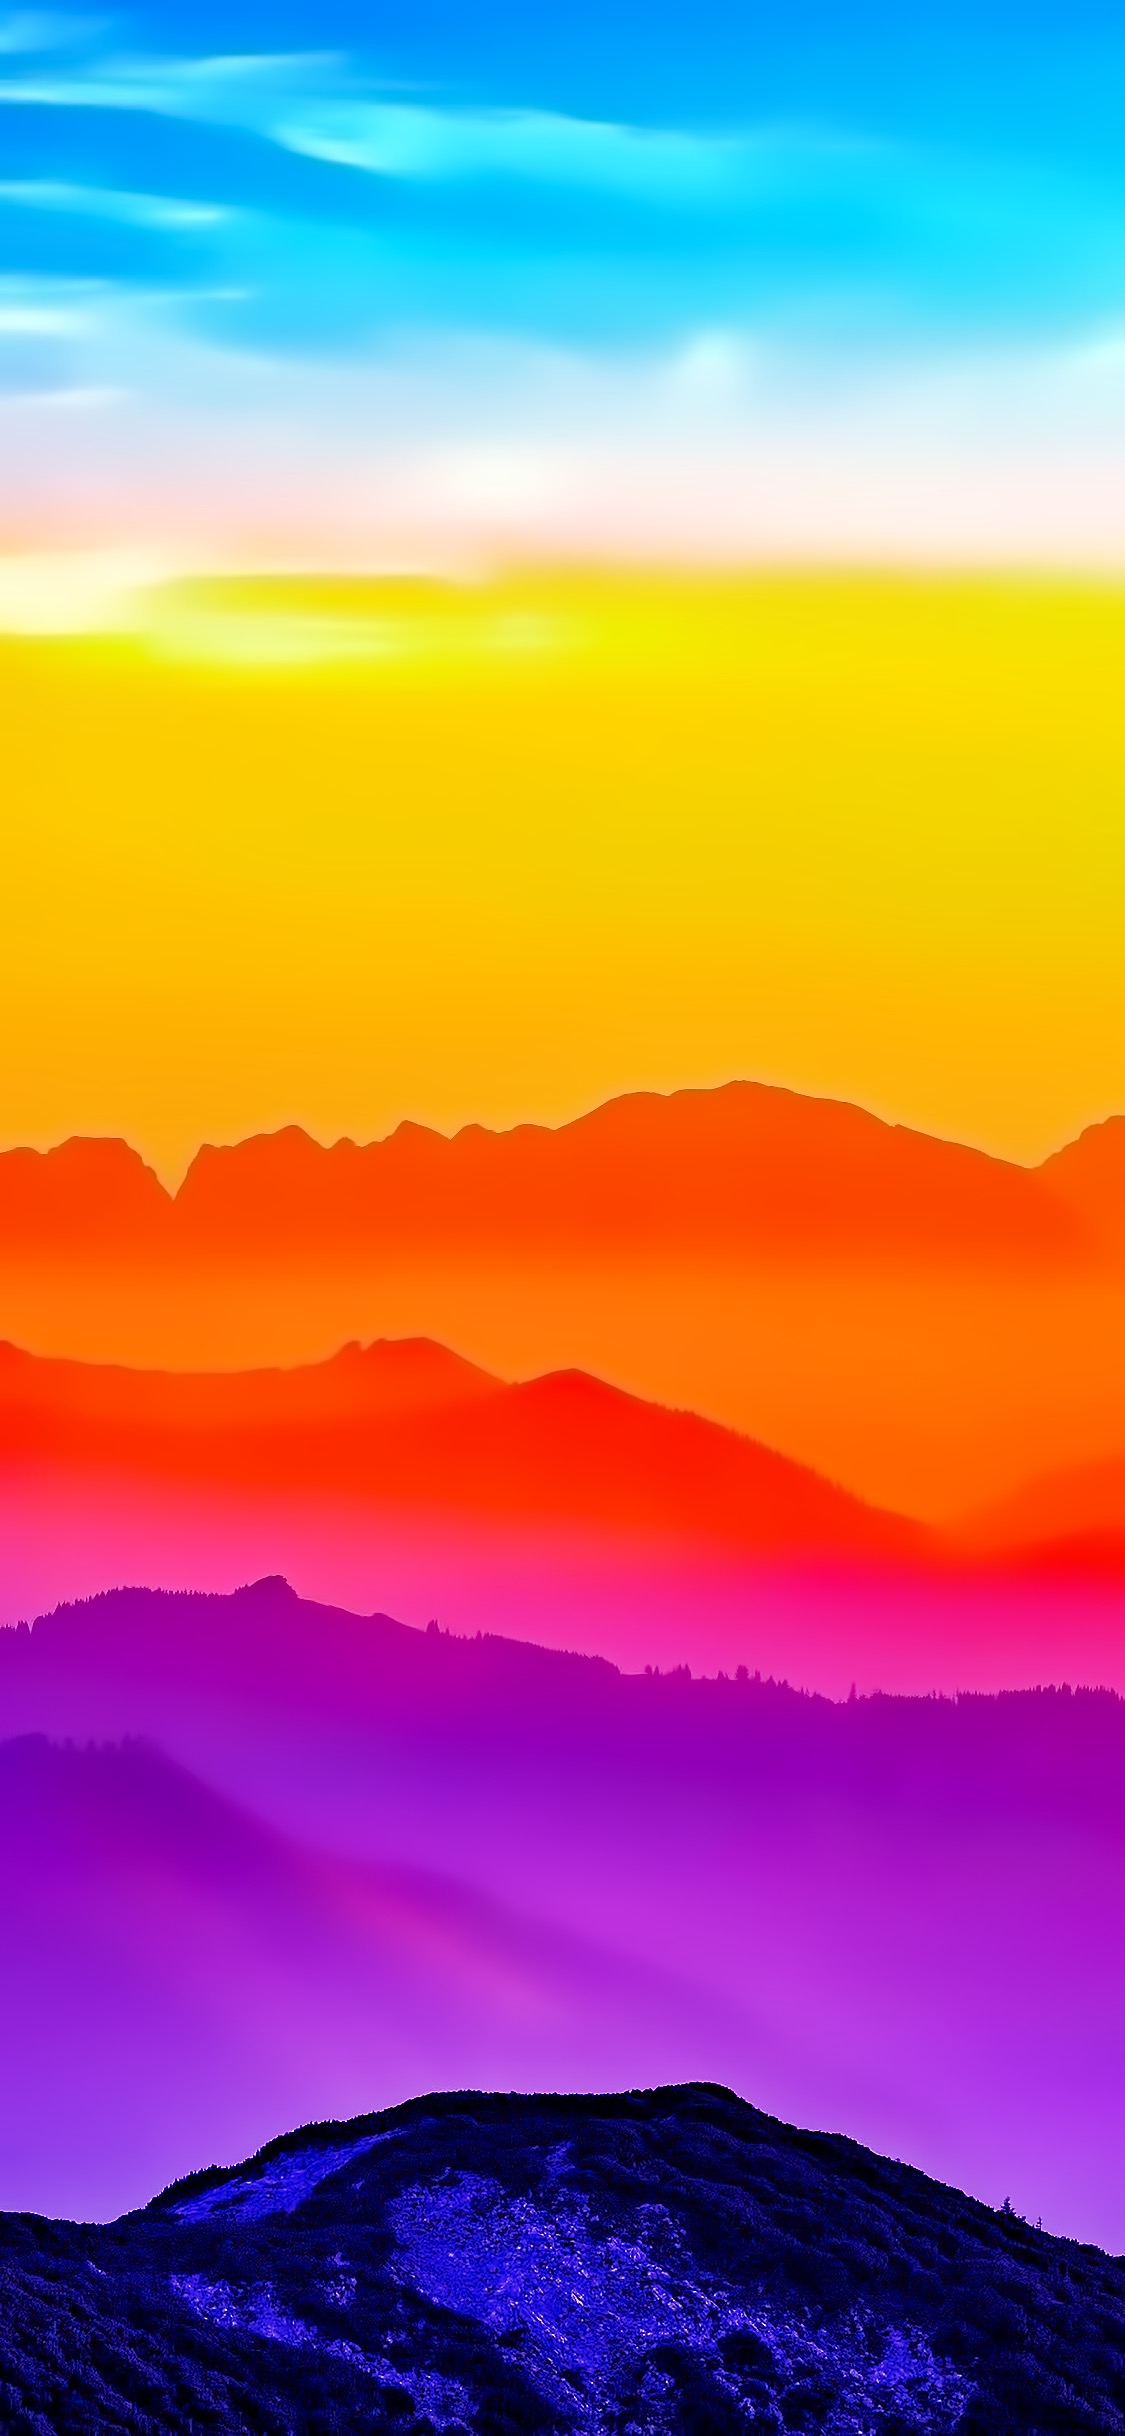 bunte iphone wallpaper,himmel,horizont,nachglühen,orange,sonnenaufgang